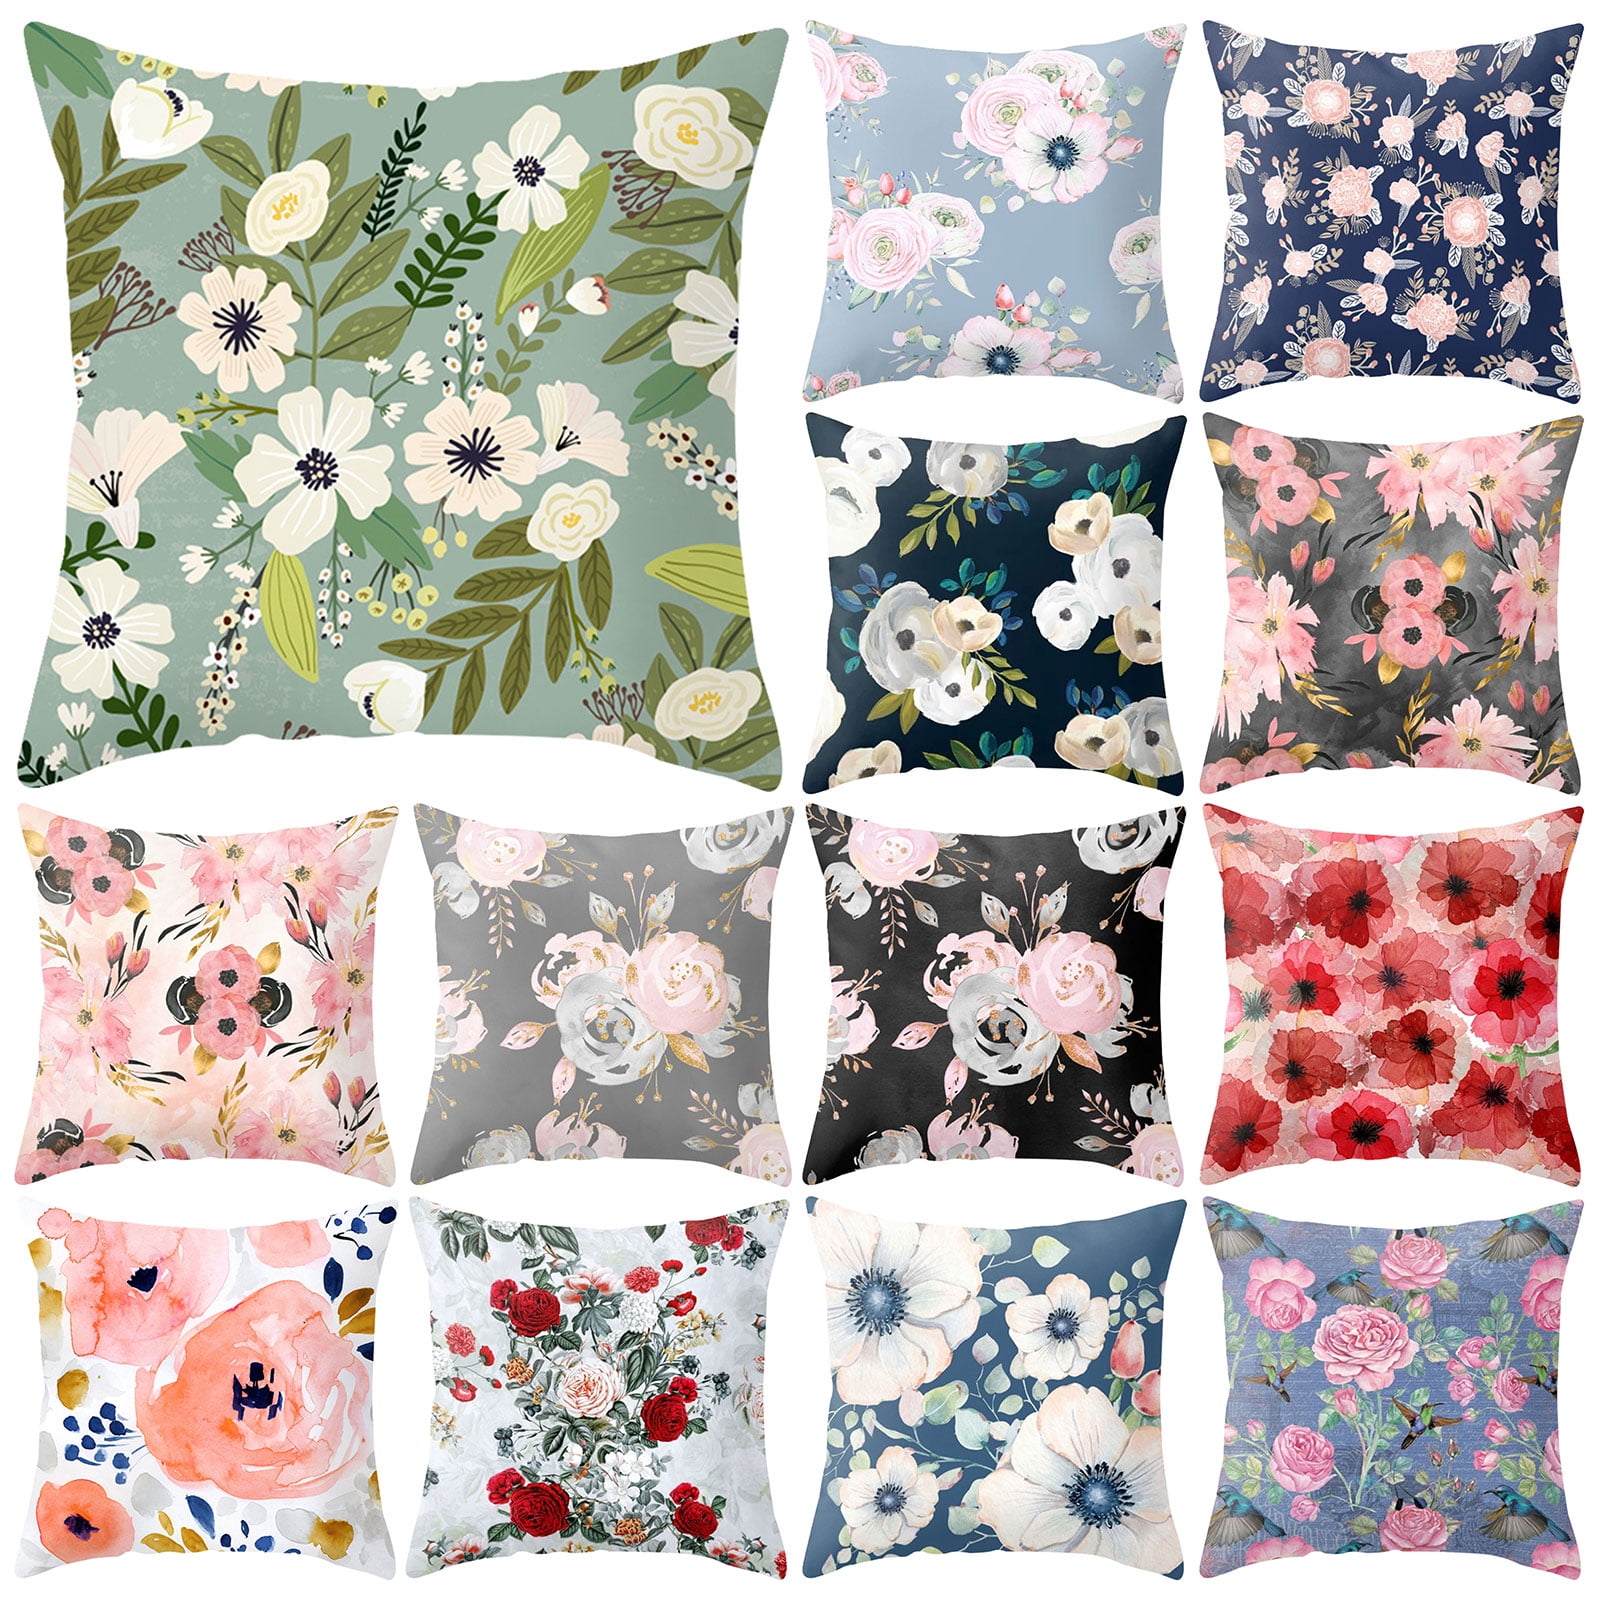 Details about   3D Flowers Tree Pillow Case Cotton Linen Cushion Covers Sofa Gift Home Decor US 